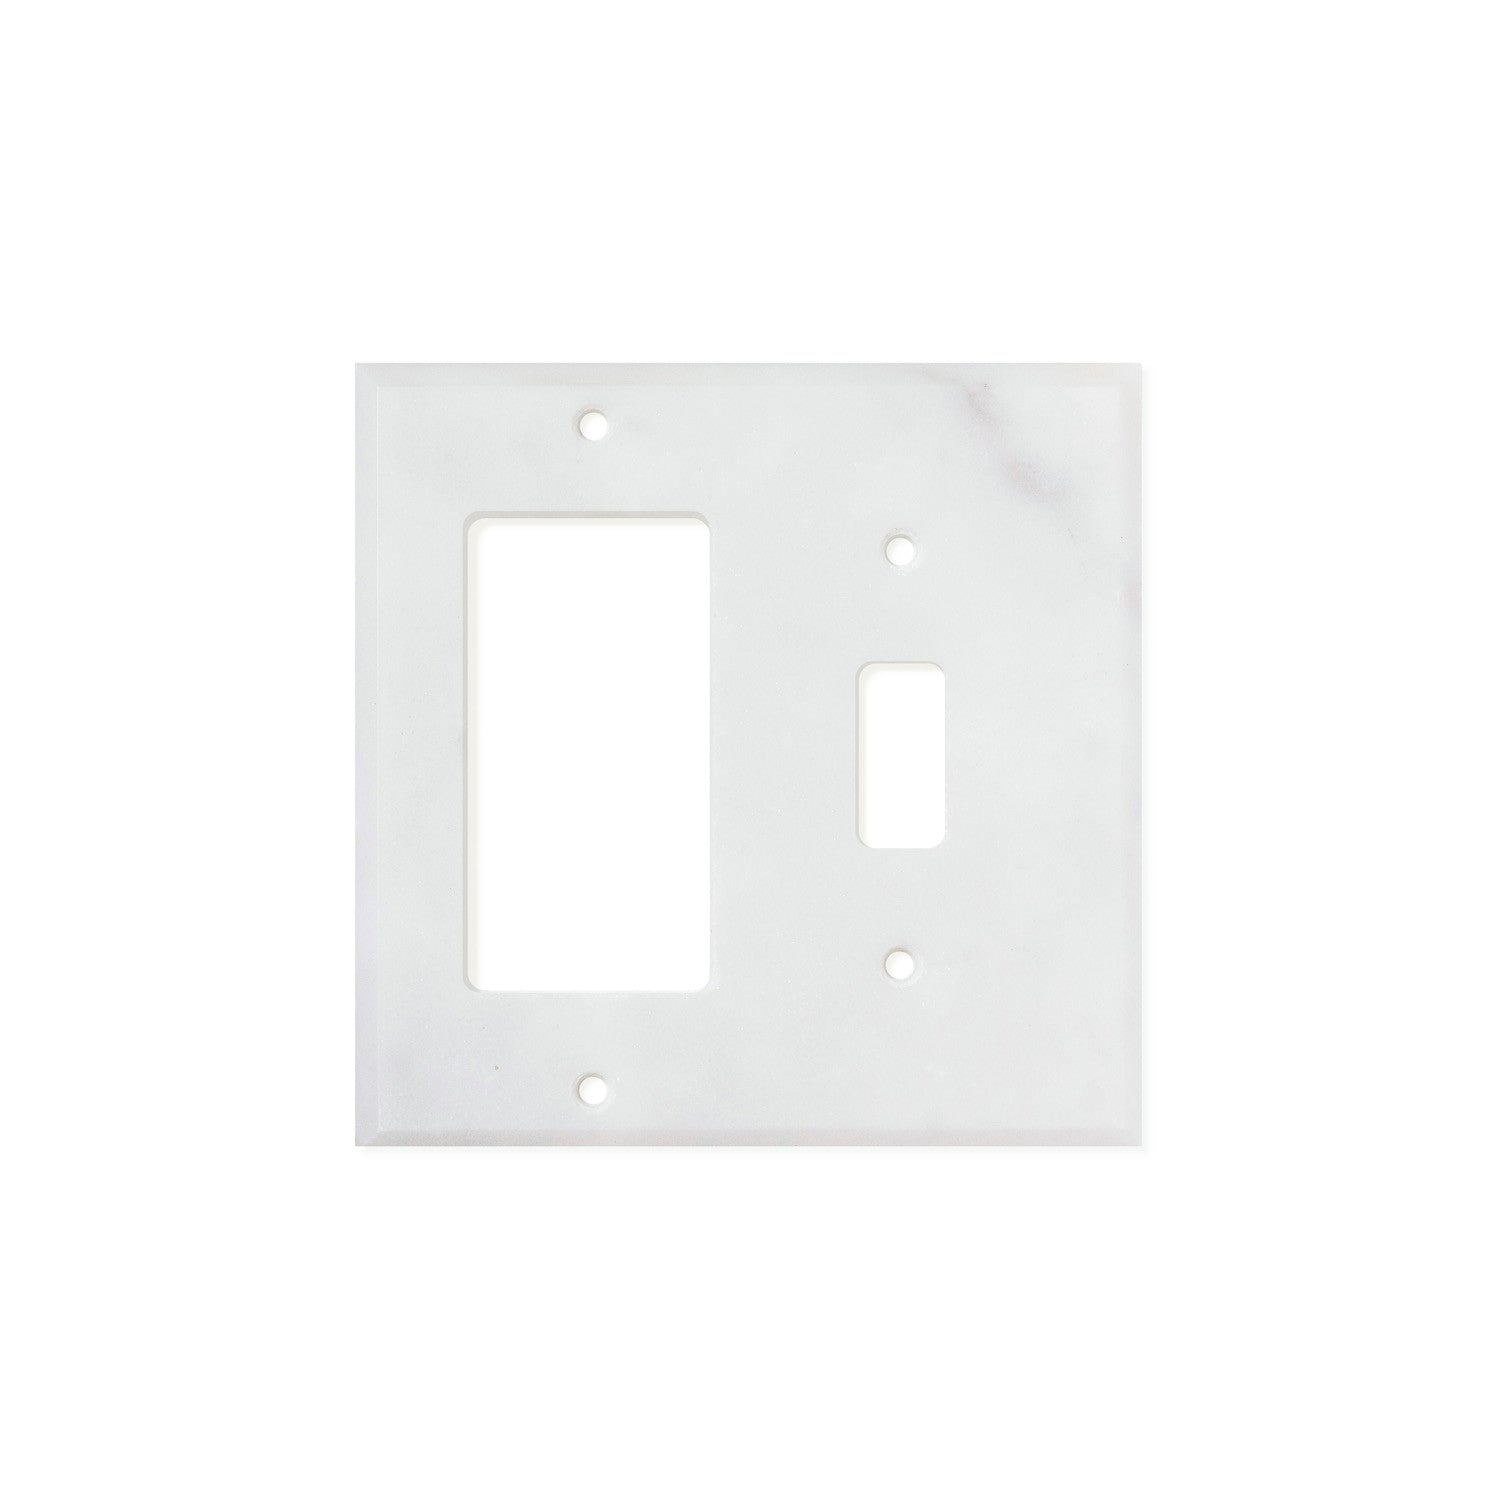 Bianco Carrara (Carrara White) Marble Switch Plate Cover, Honed (TOGGLE ROCKER) - Tilephile